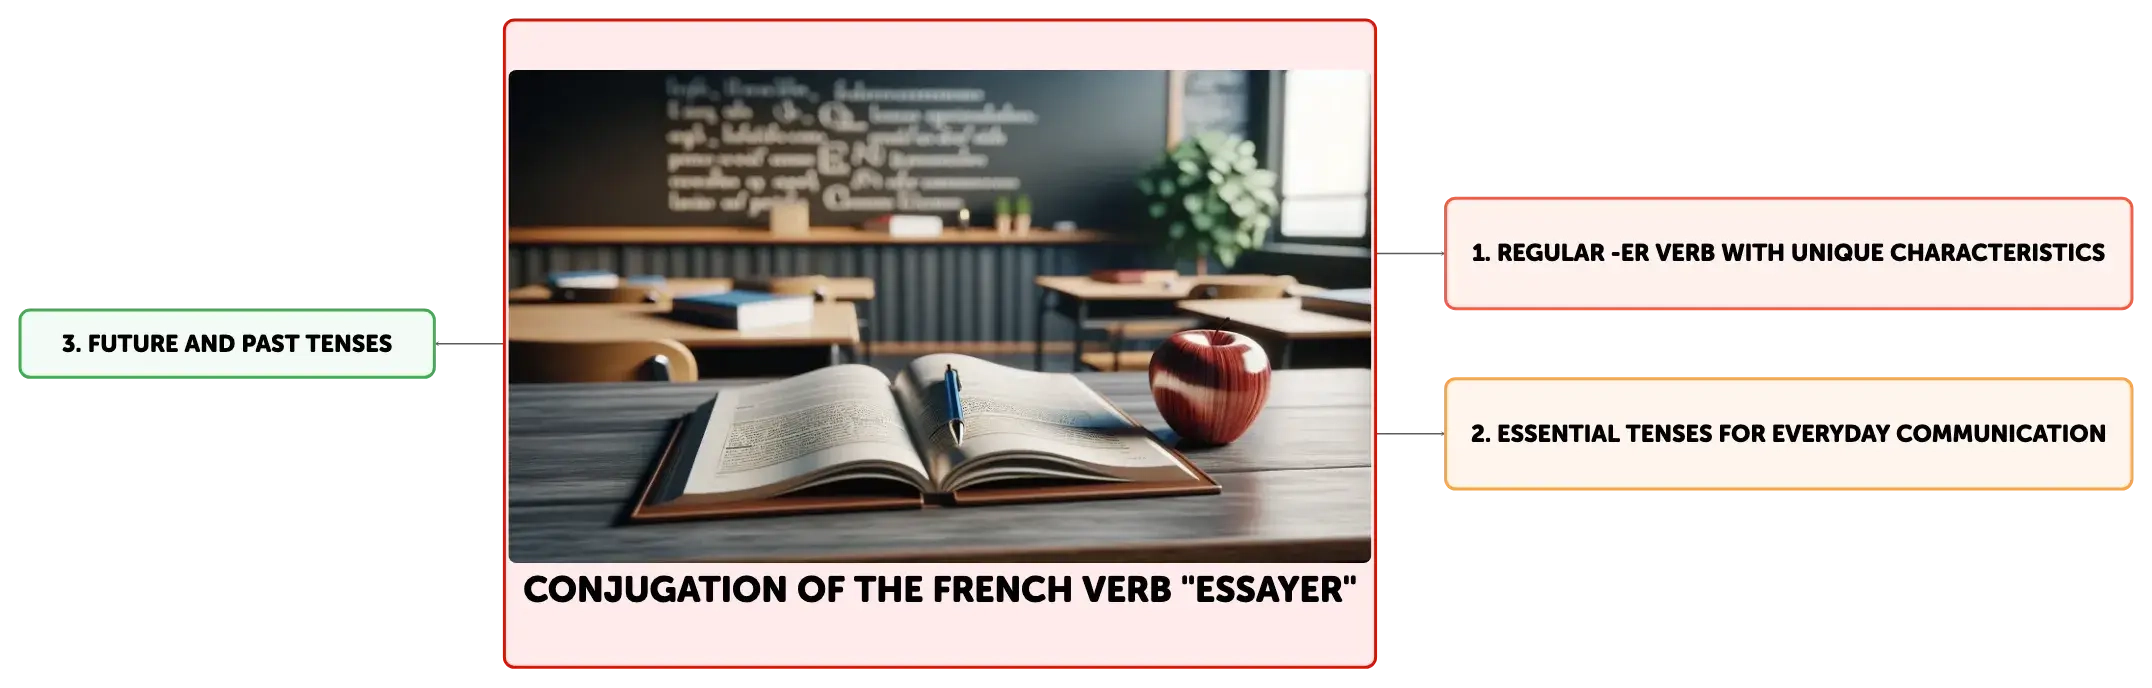 french conjugation of essayer present tense